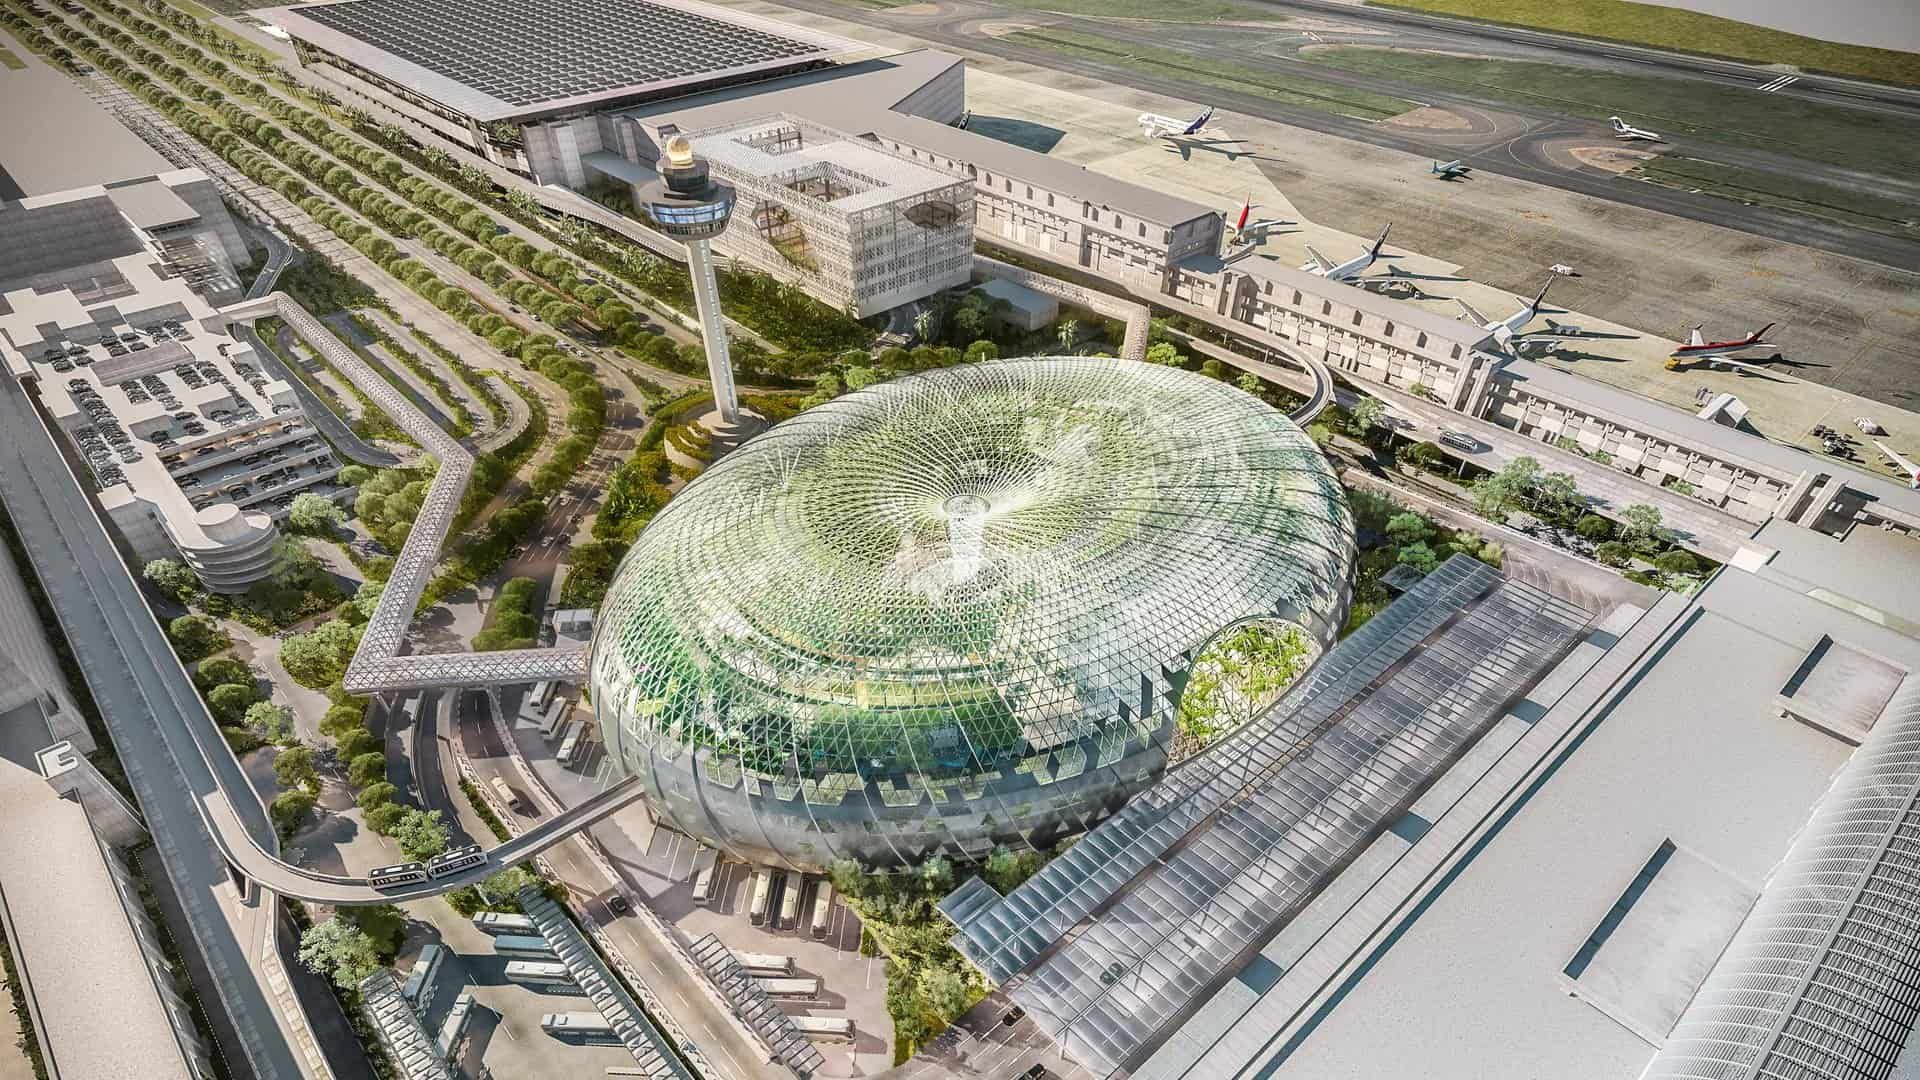  Visualisation of Jewel building at Changi Airport, Singapore